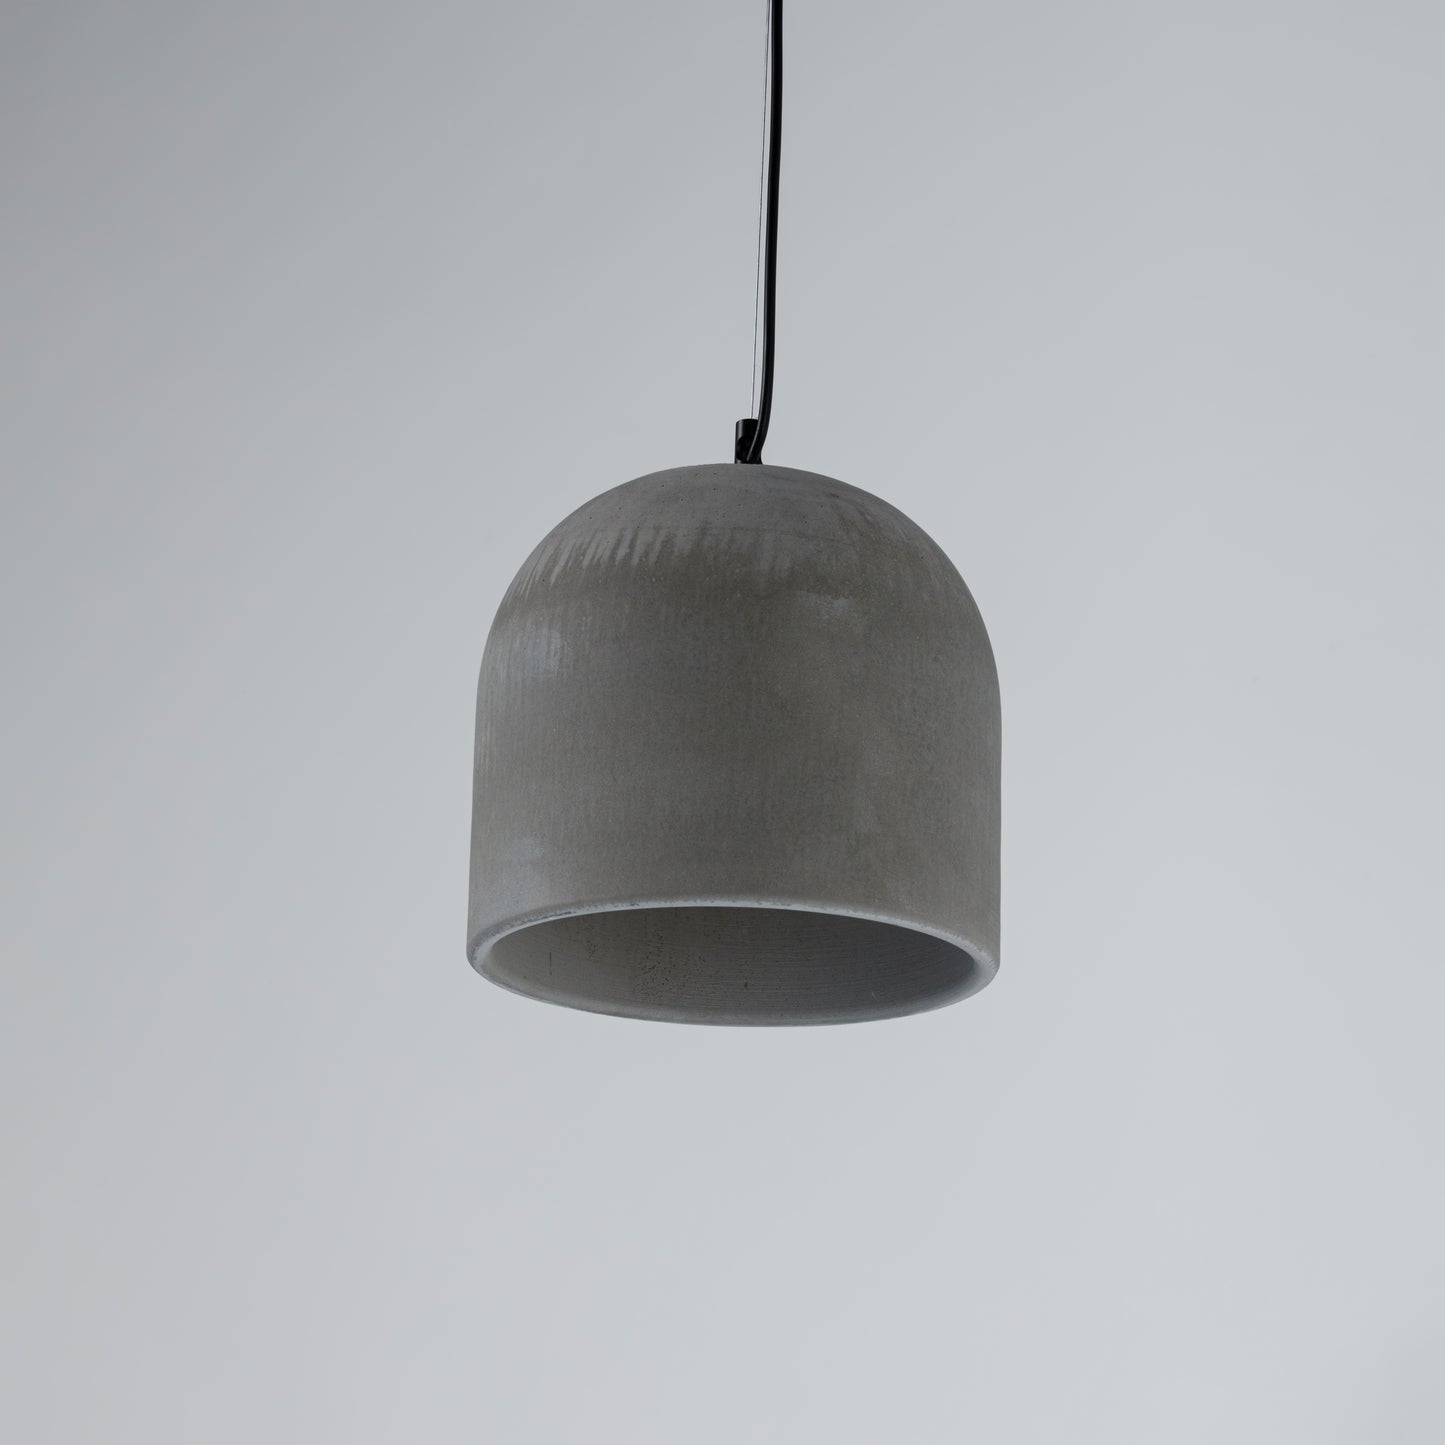 Large Black Moire Concrete Pendant Lamp, Modern Pendant Lamp